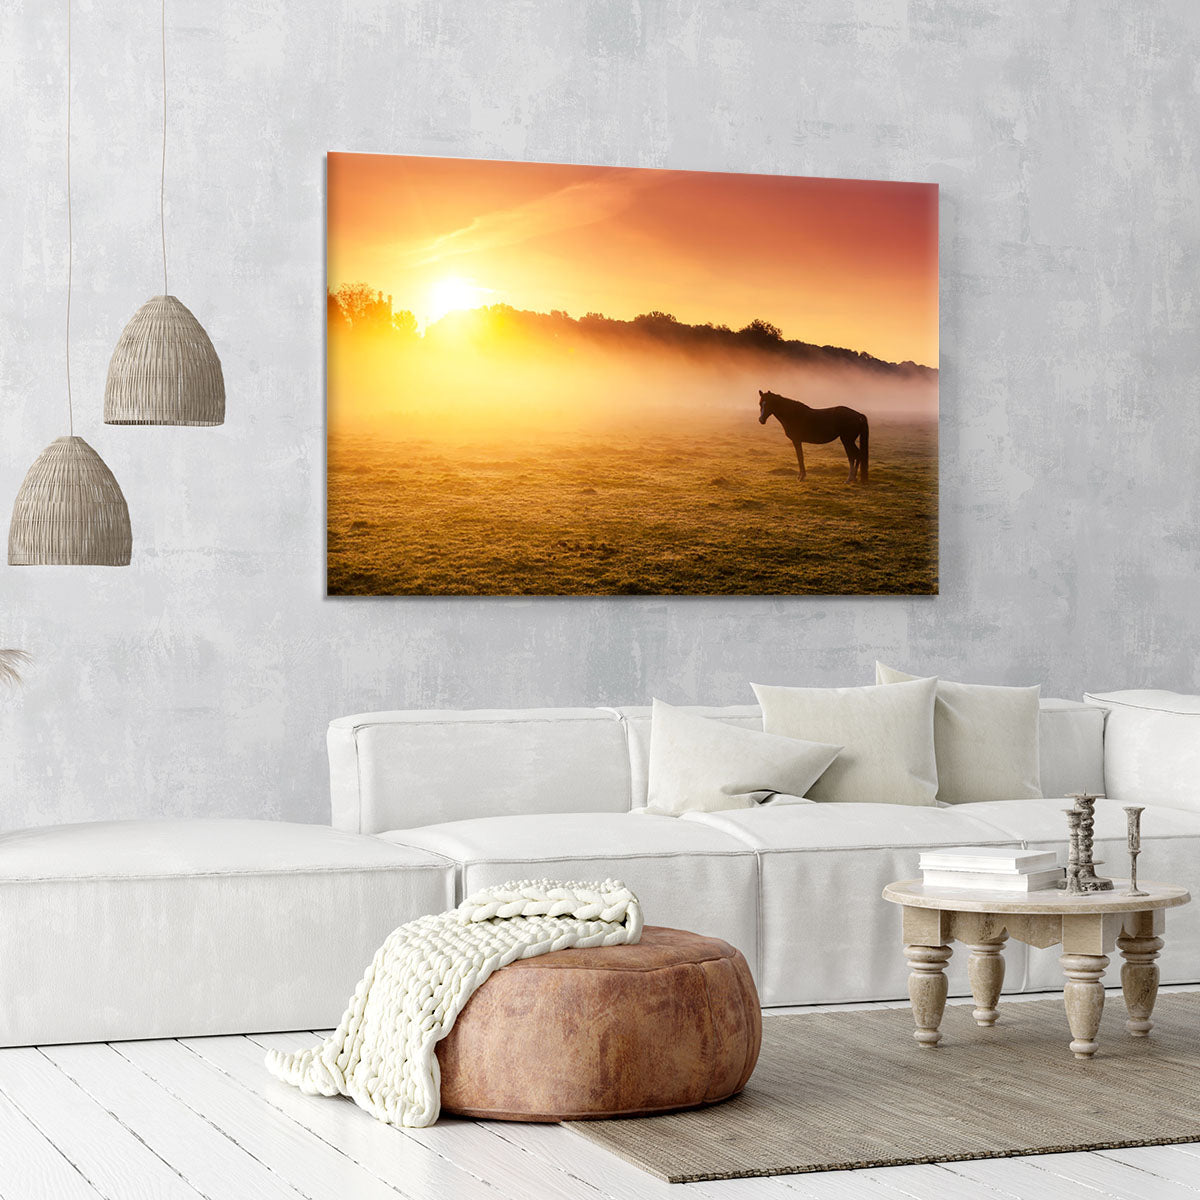 Arabian horses grazing on pasture at sundown in orange sunny beams. Dramatic foggy scene Canvas Print or Poster - Canvas Art Rocks - 6